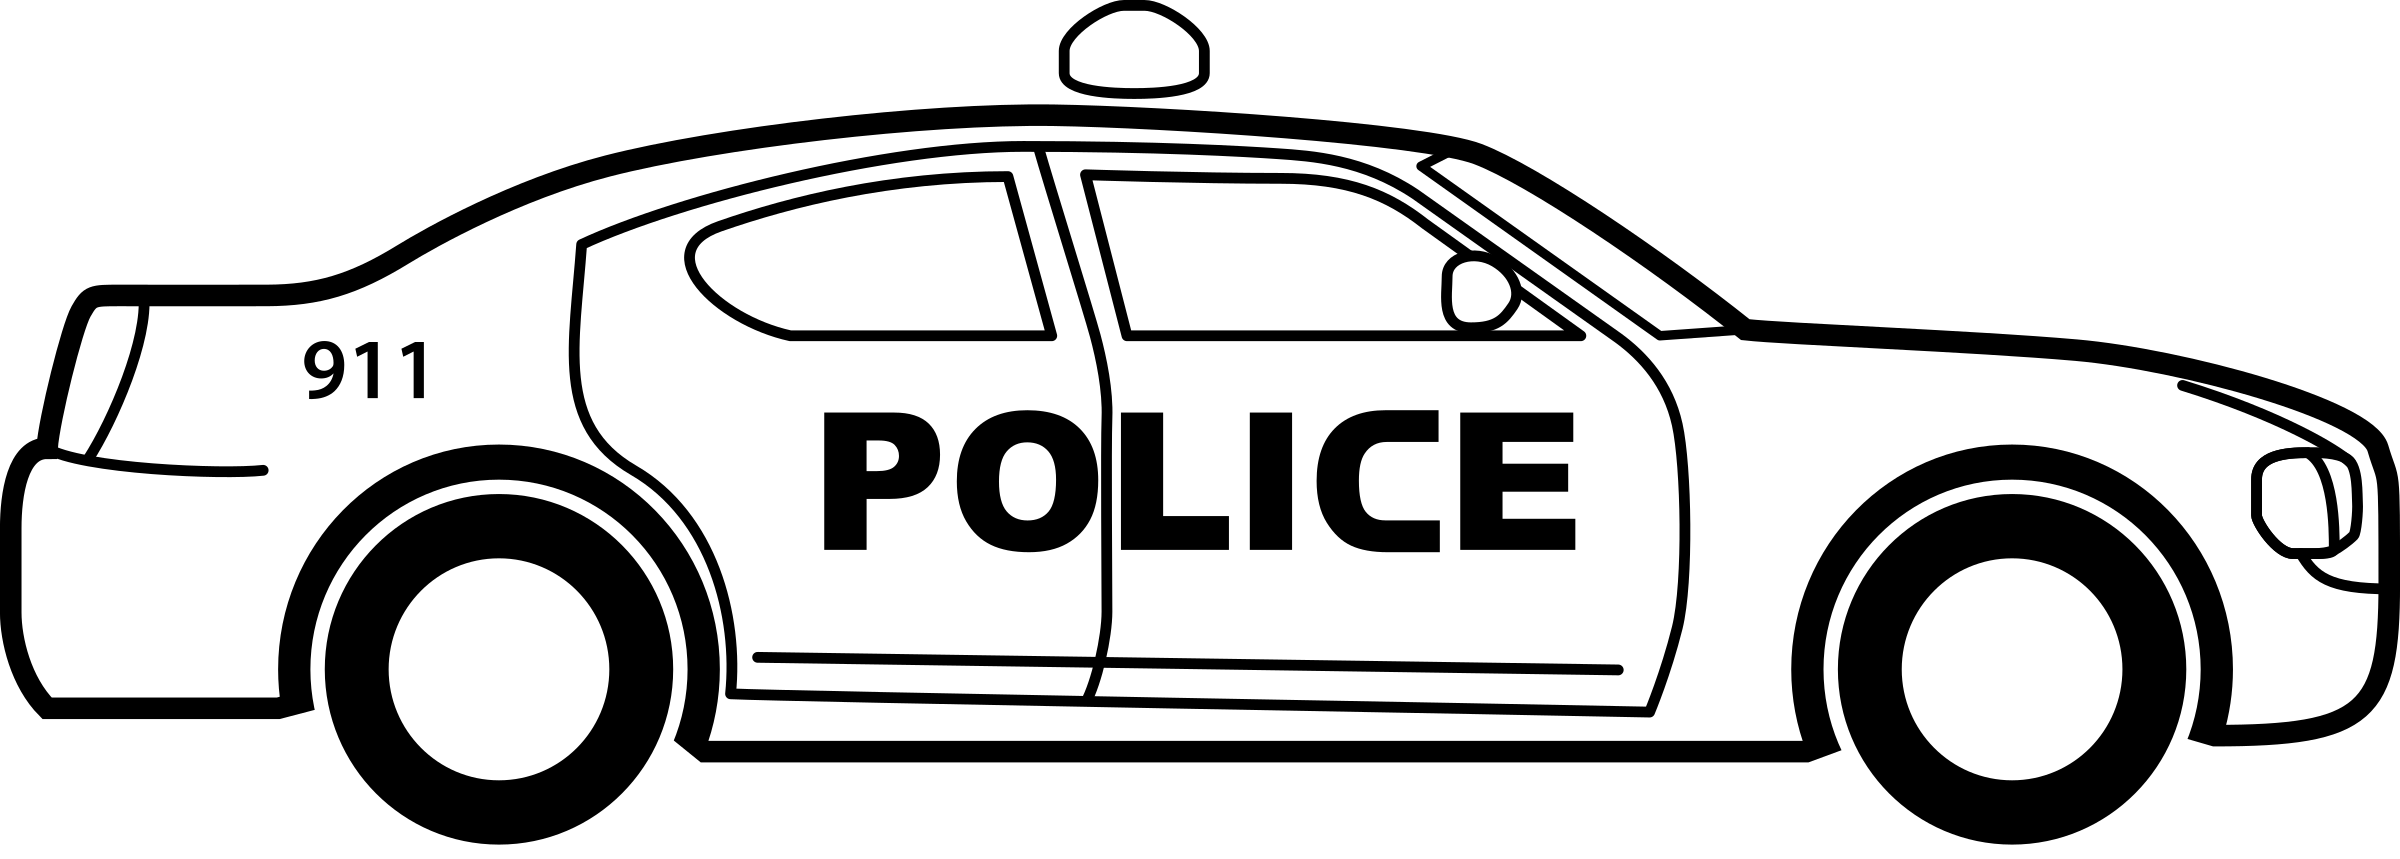 Medium Image - Police Car Black And White Clipart (2400x860)